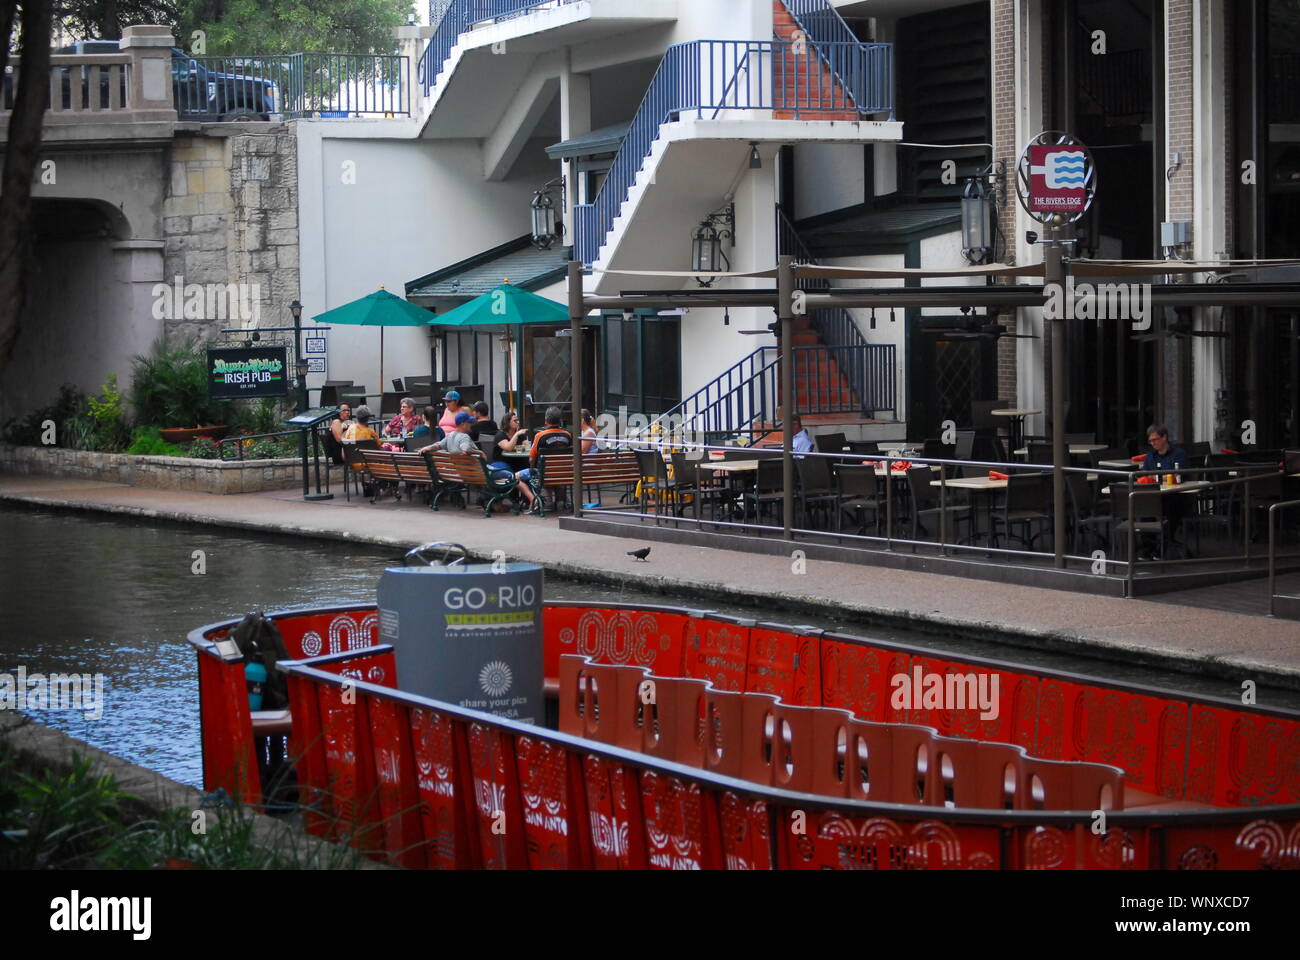 A gondola in front of a restaurant on the Riverwalk in San Antonio,Texas Stock Photo